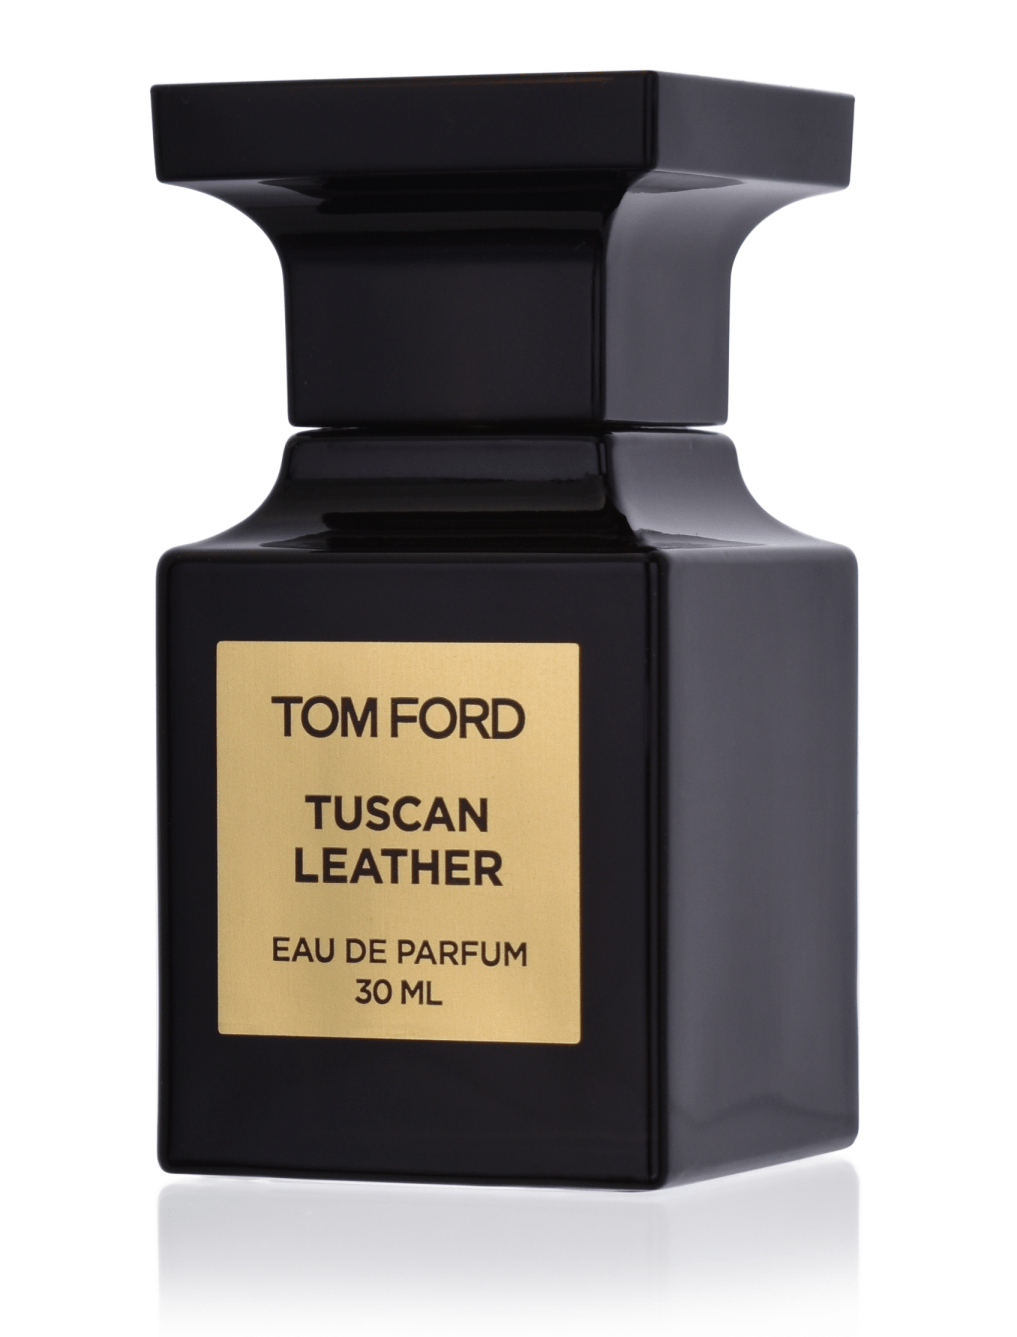 Tom Ford Tuscan Leather 30 ml Eau de Parfum